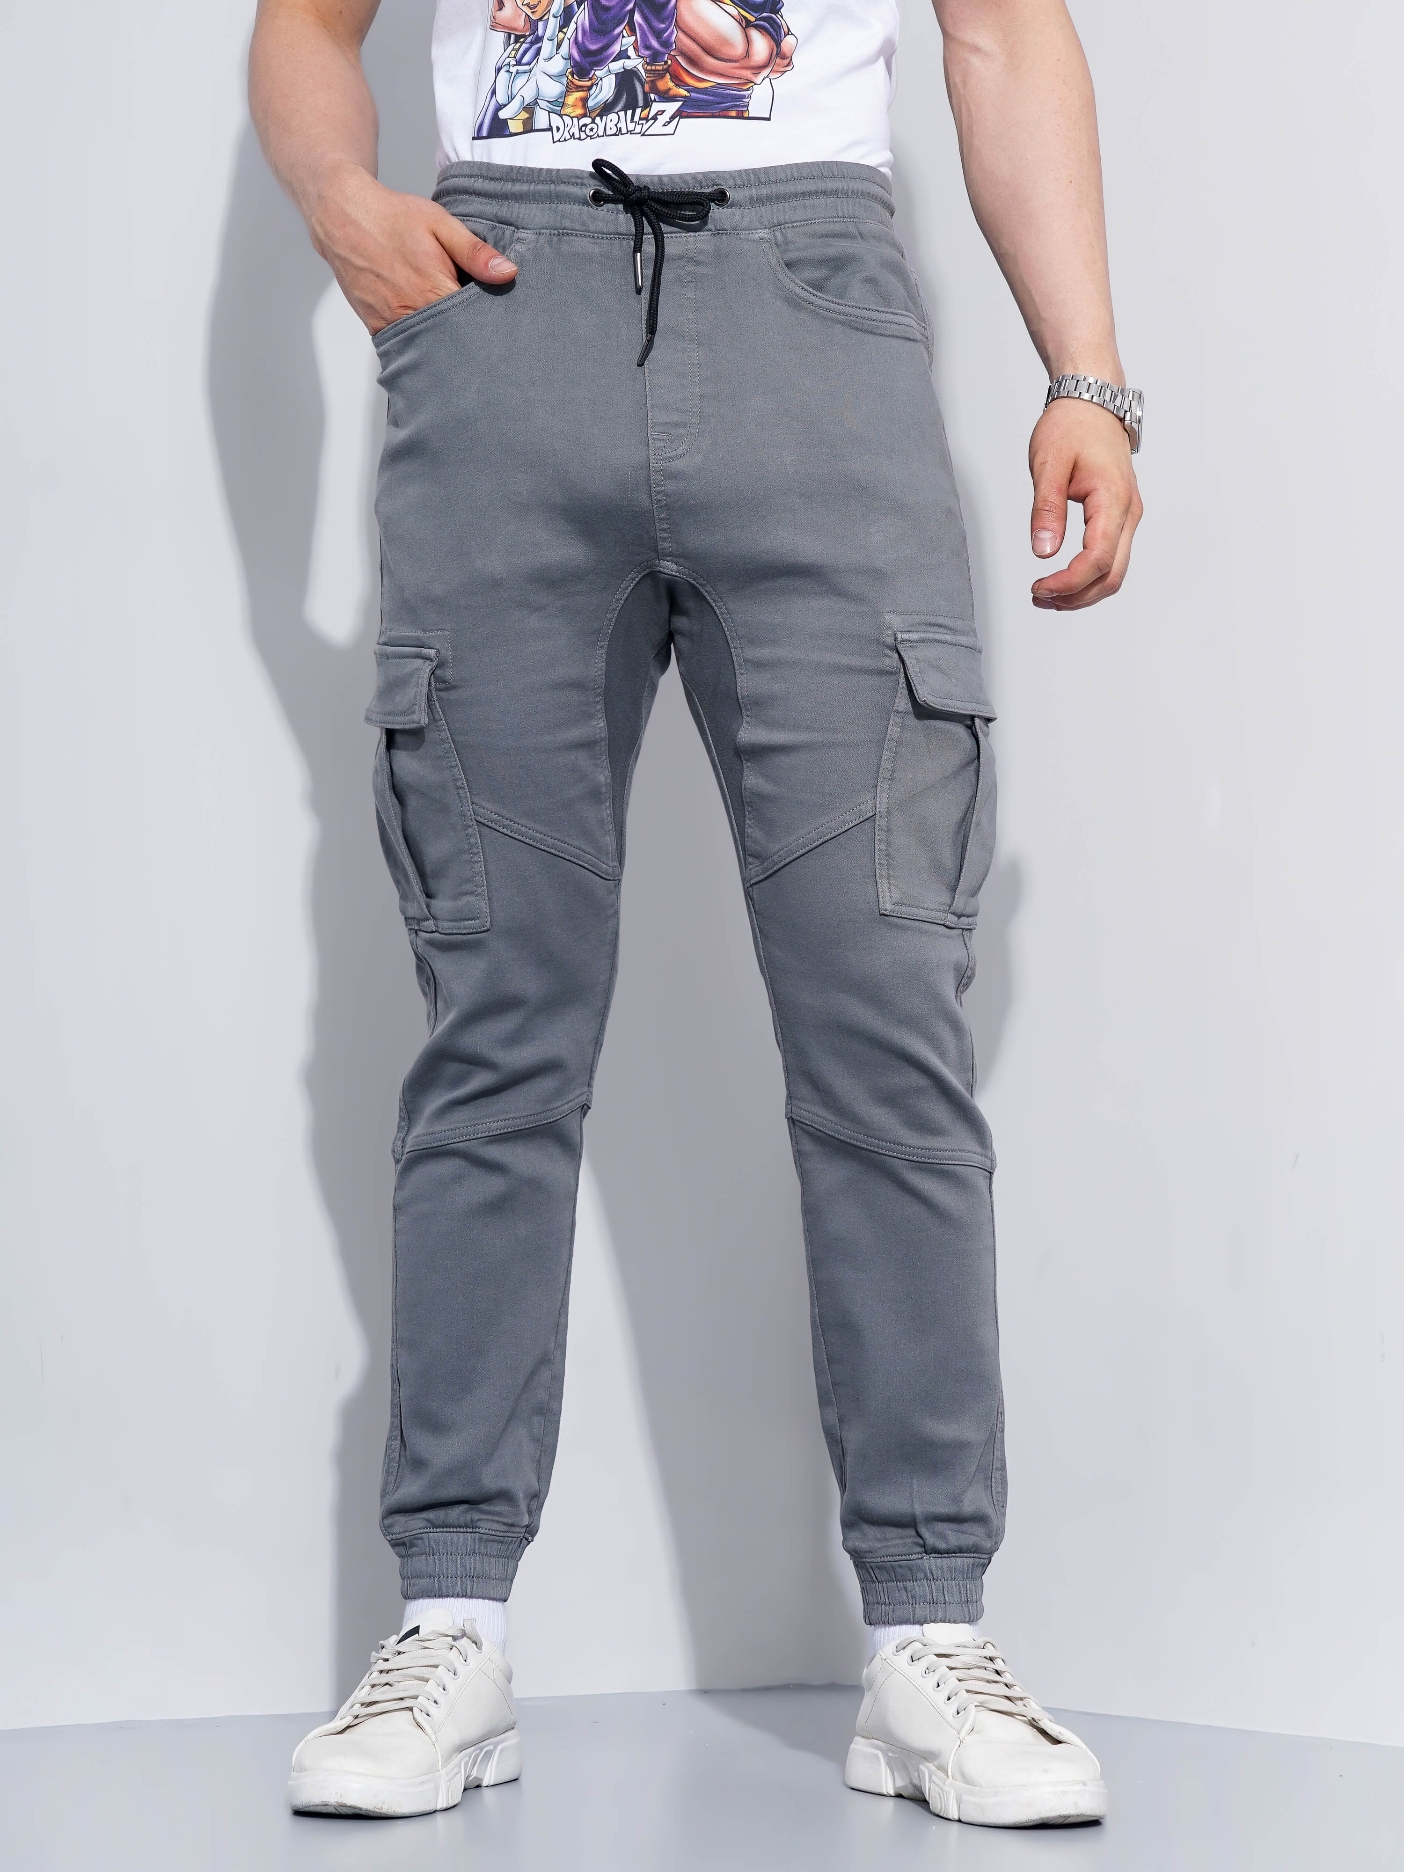 Buy Celio Men's Navy Blue Casual Trousers online